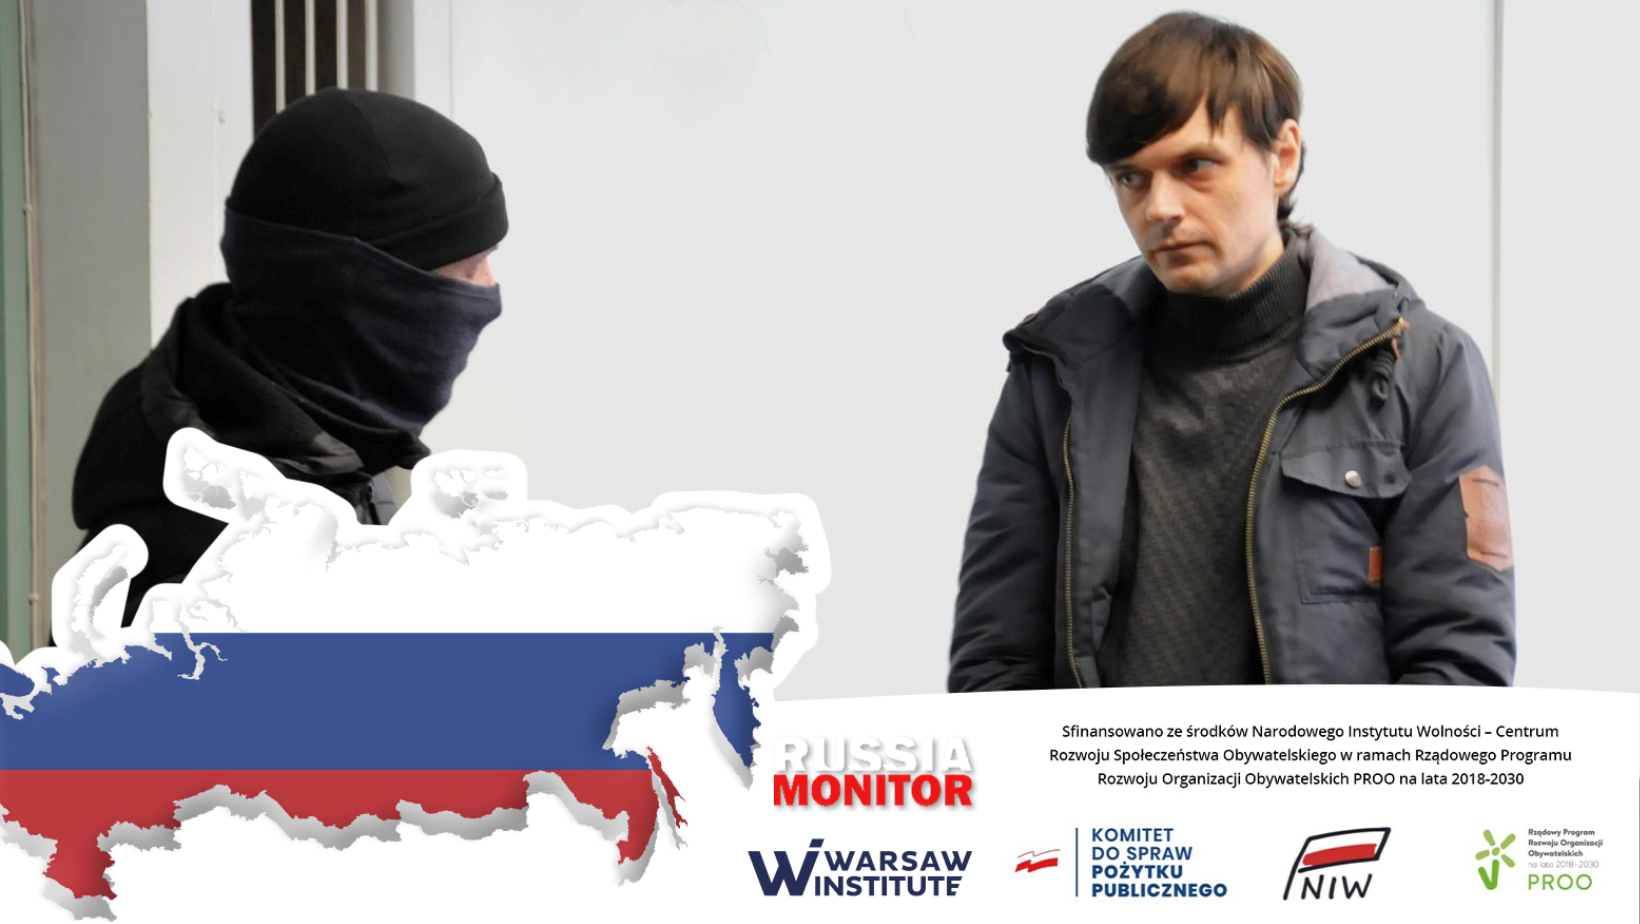 Former Russian Spy Seeks Asylum In Estonia